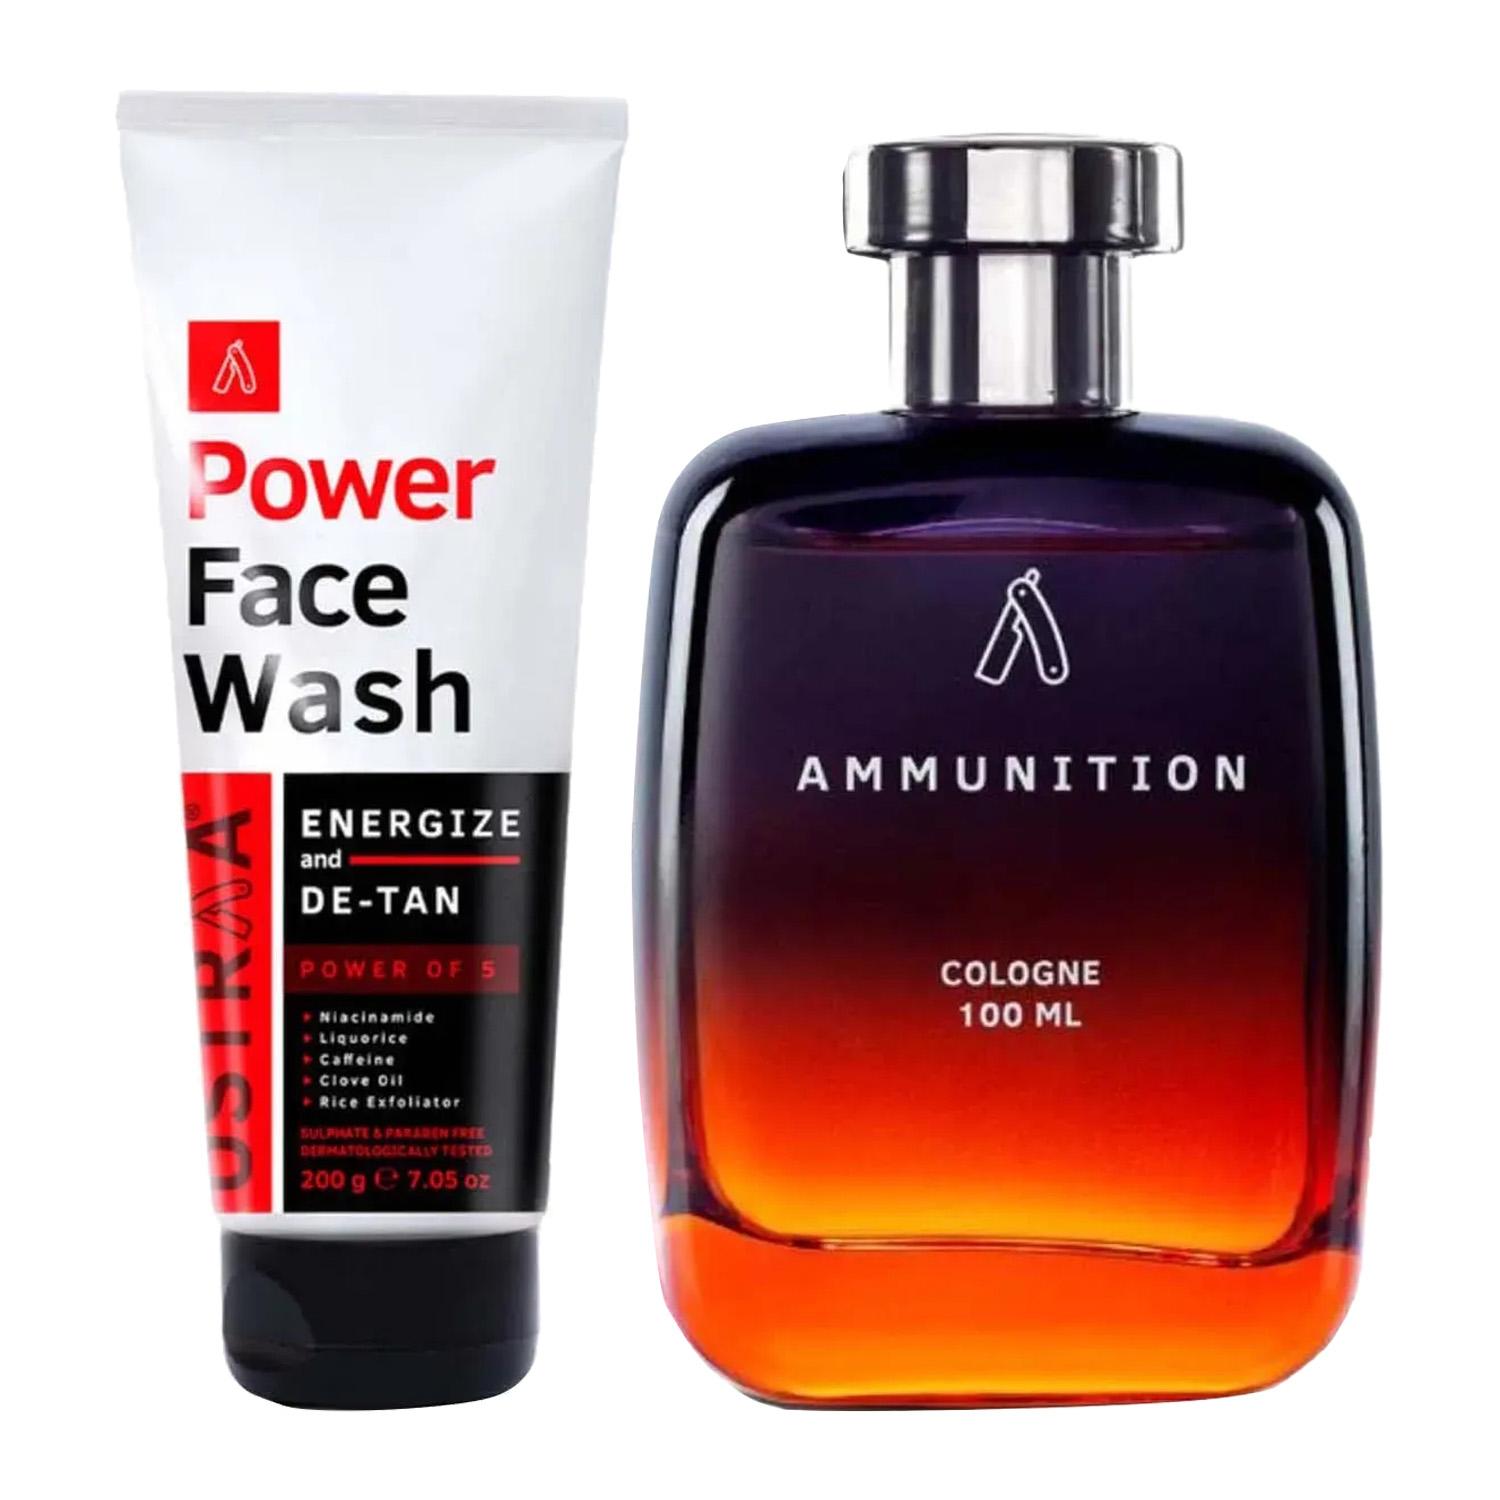 Ustraa Energize And De-Tan Power Face Wash (200 g) & Cologne For Men Ammunition (100 ml) Combo